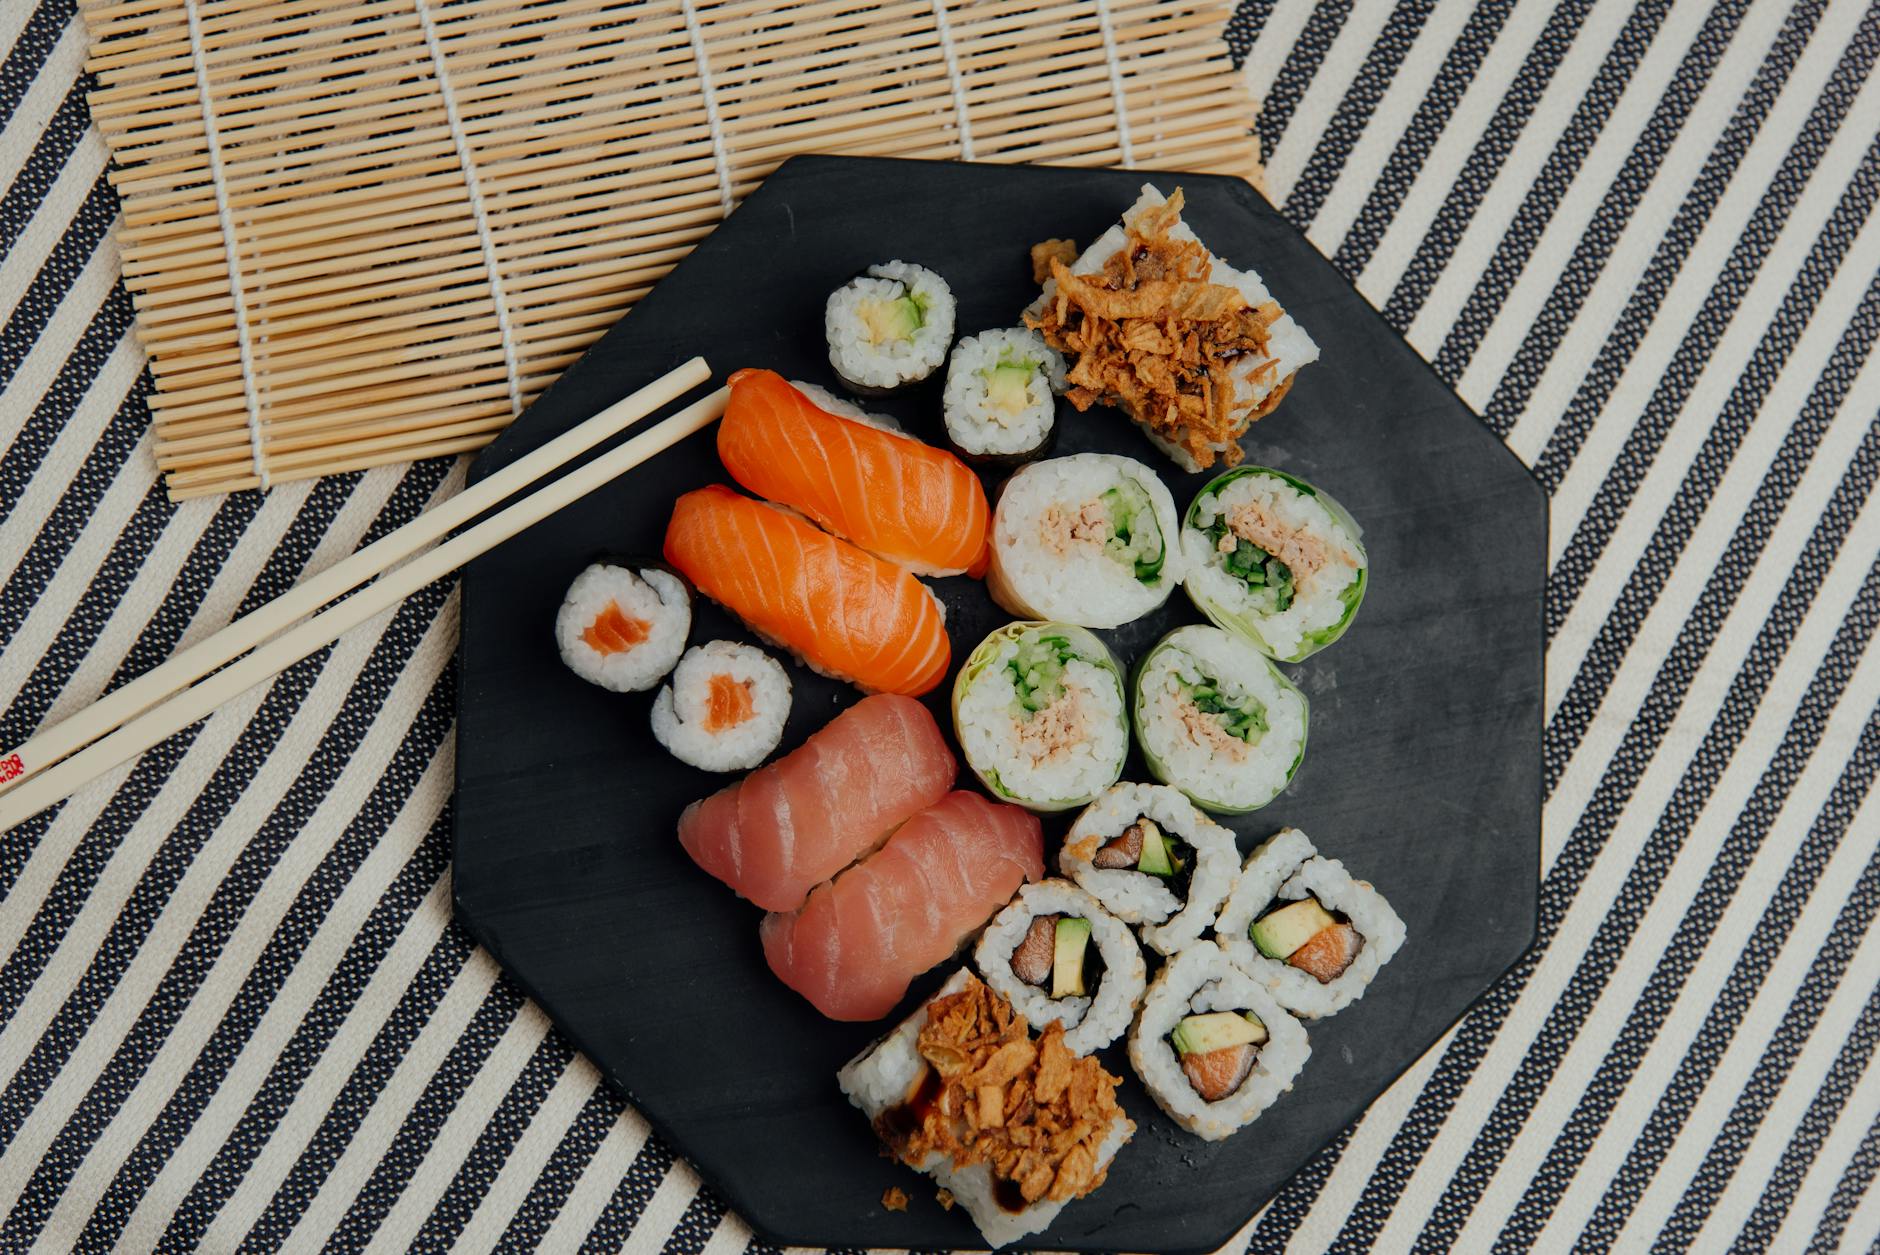 Plate with sushi rolls near chopsticks